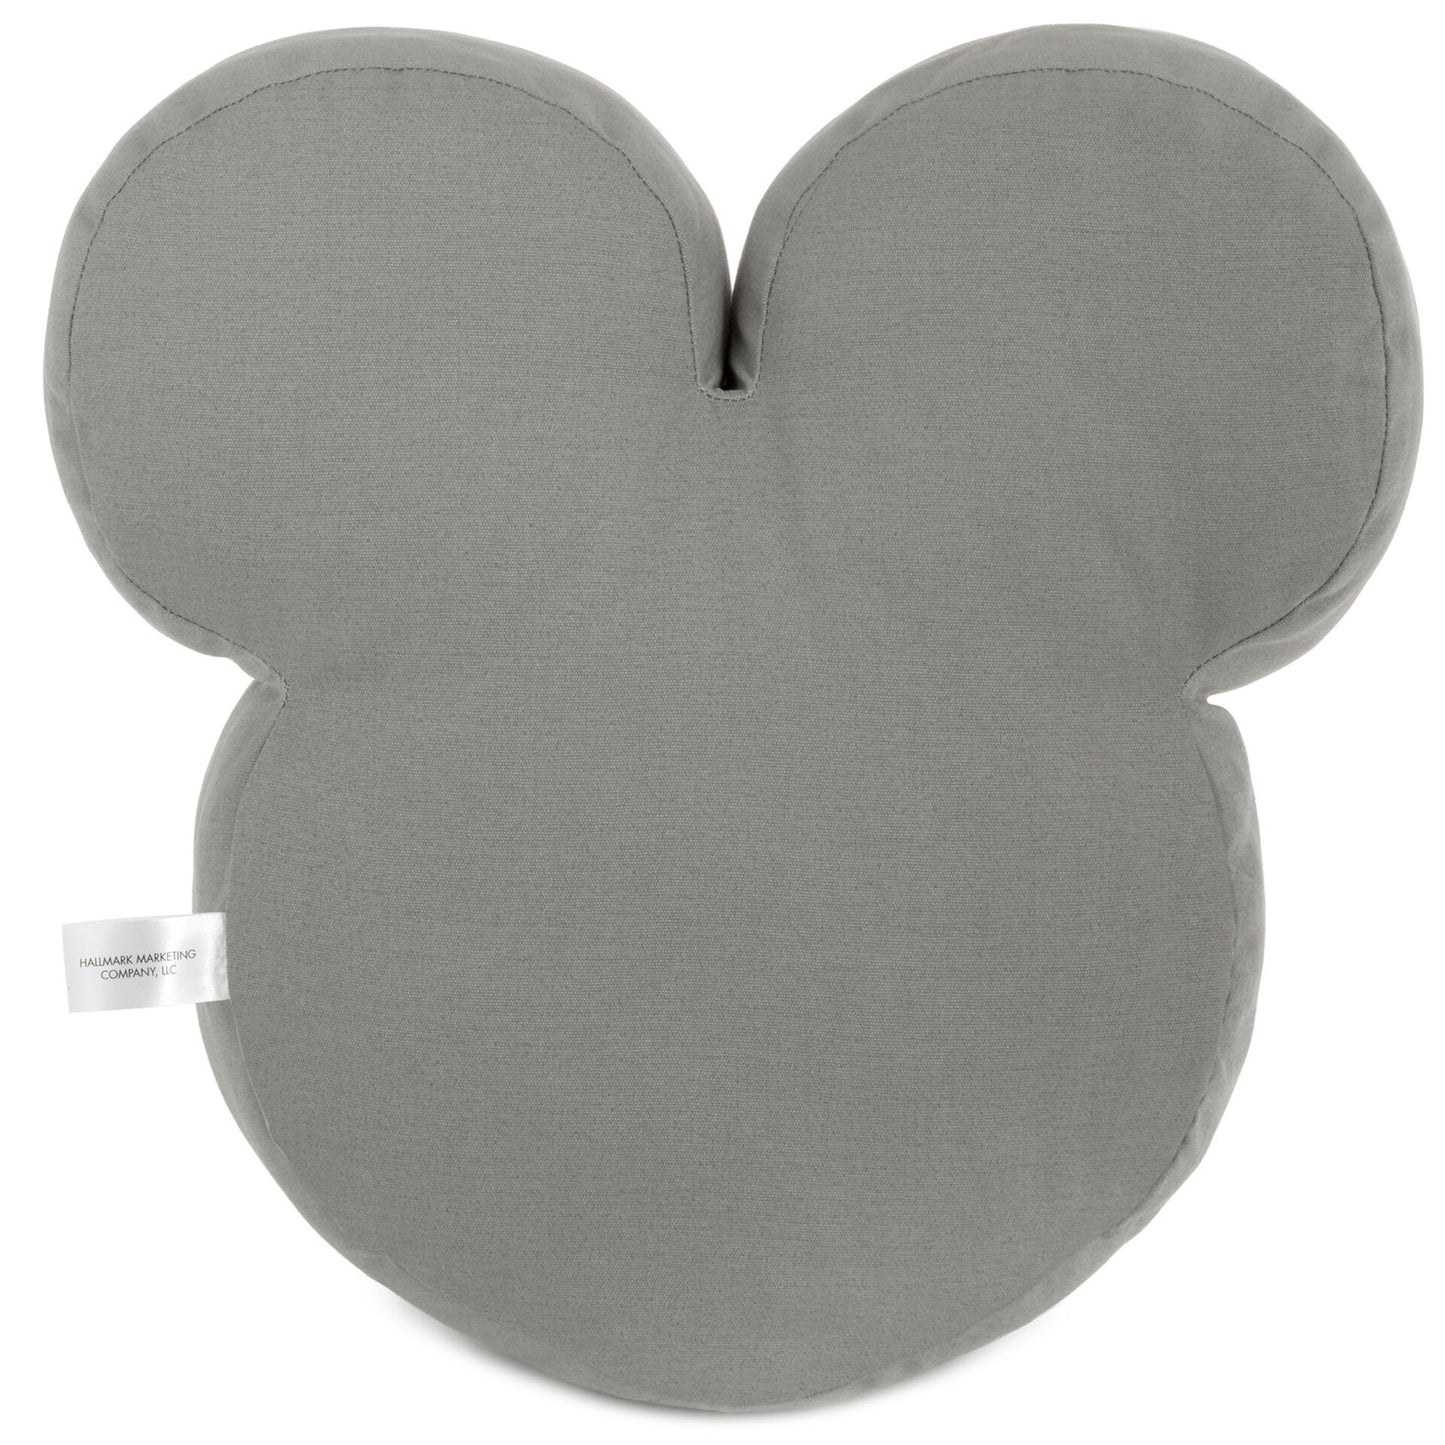 Light Slate Gray Disney Mickey Mouse Shaped Decorative Throw Pillow